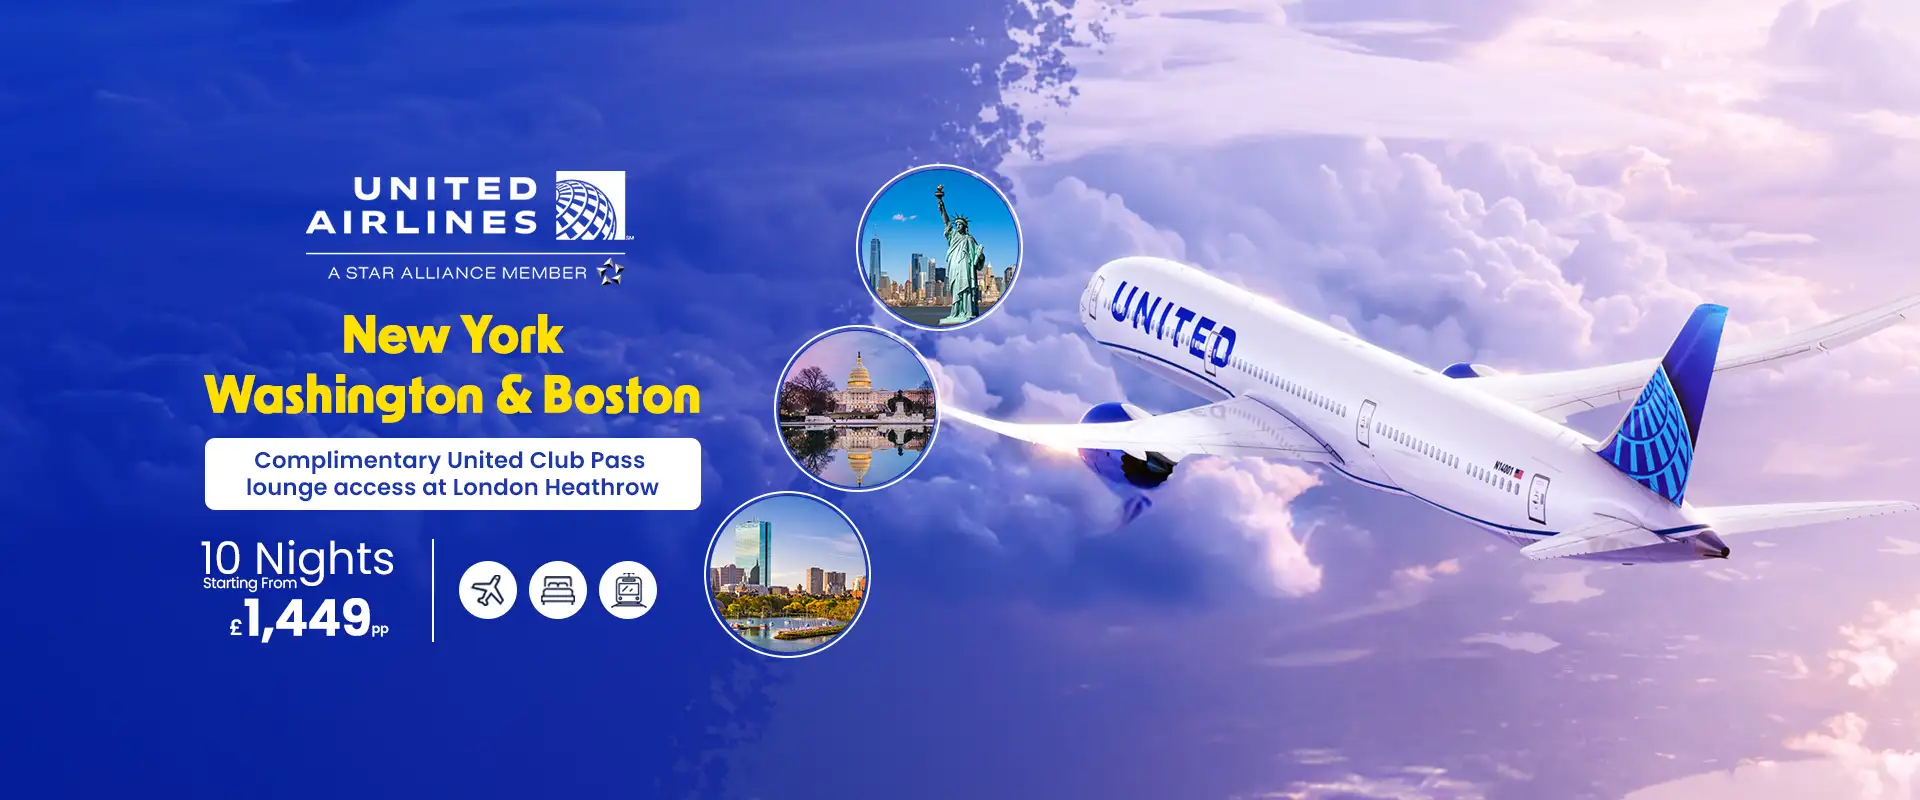 New York, Washington & Boston - United Airlines